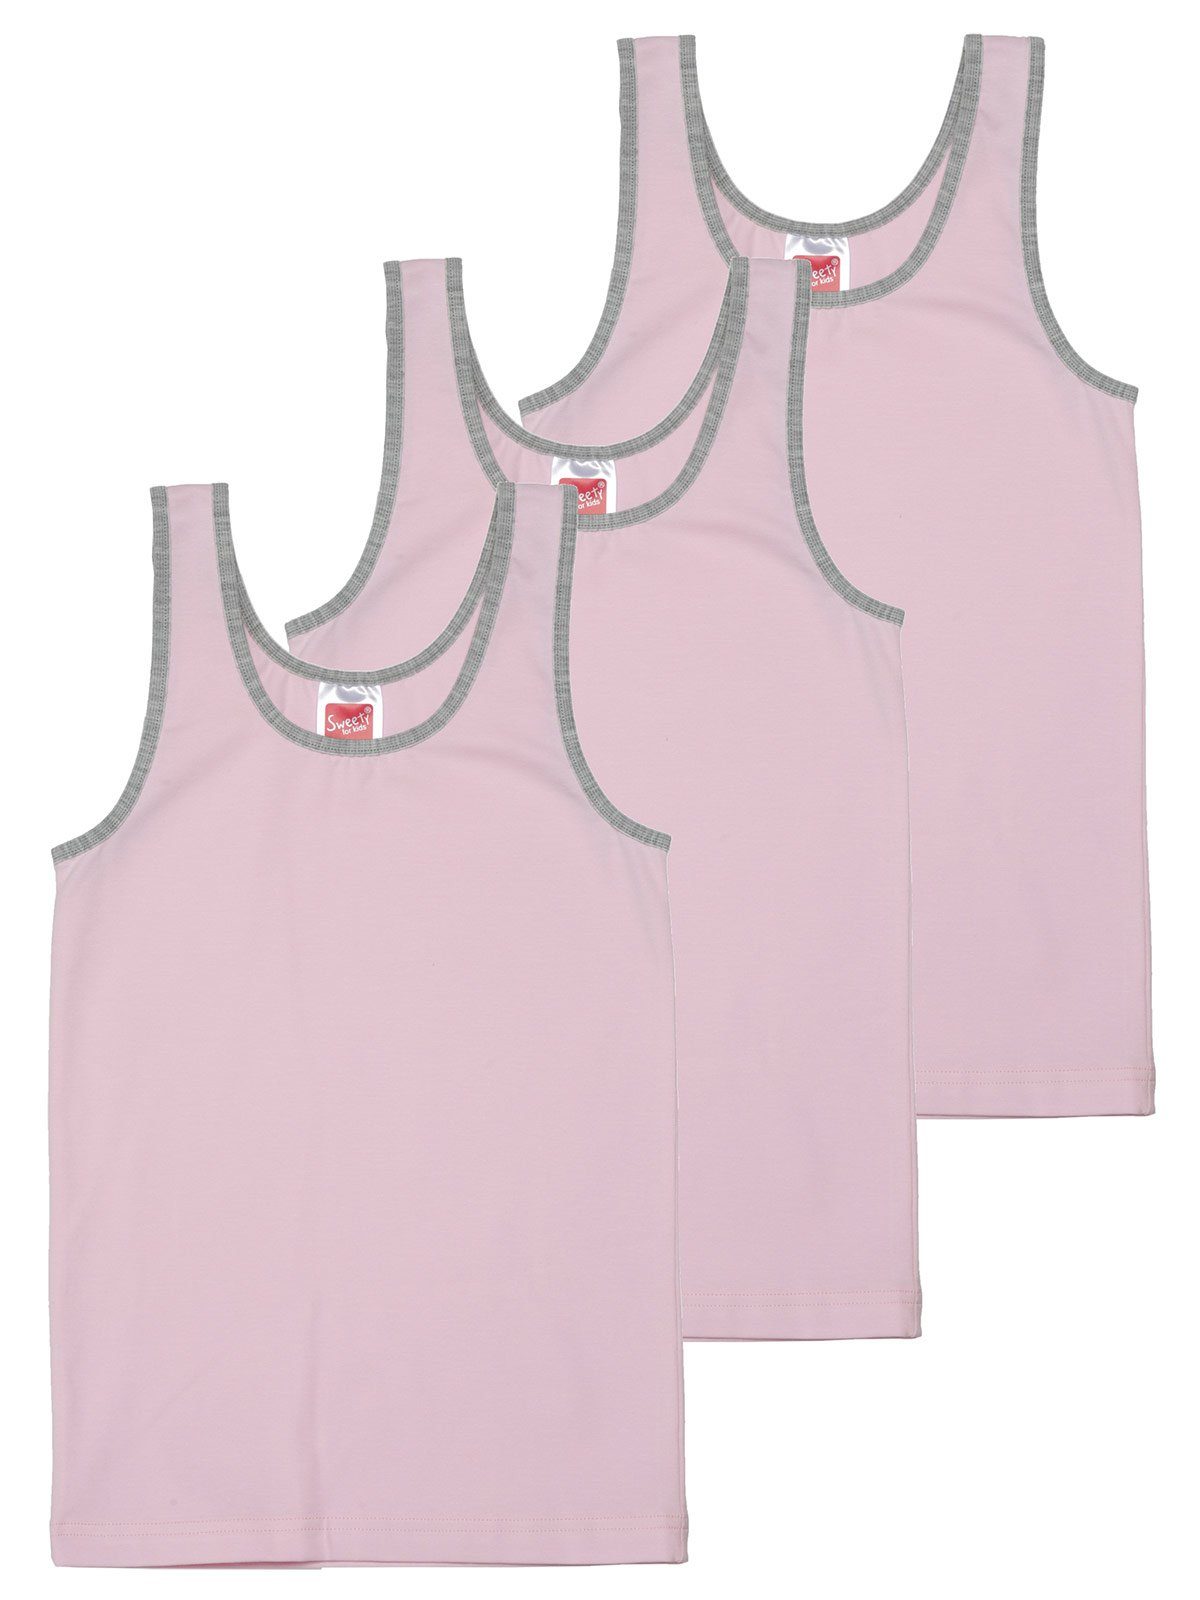 Unterhemd Mädchen Pack hohe 3er helles 3-St) Sweety Kids Unterhemd for Markenqualität rosa Jersey (Packung, Single